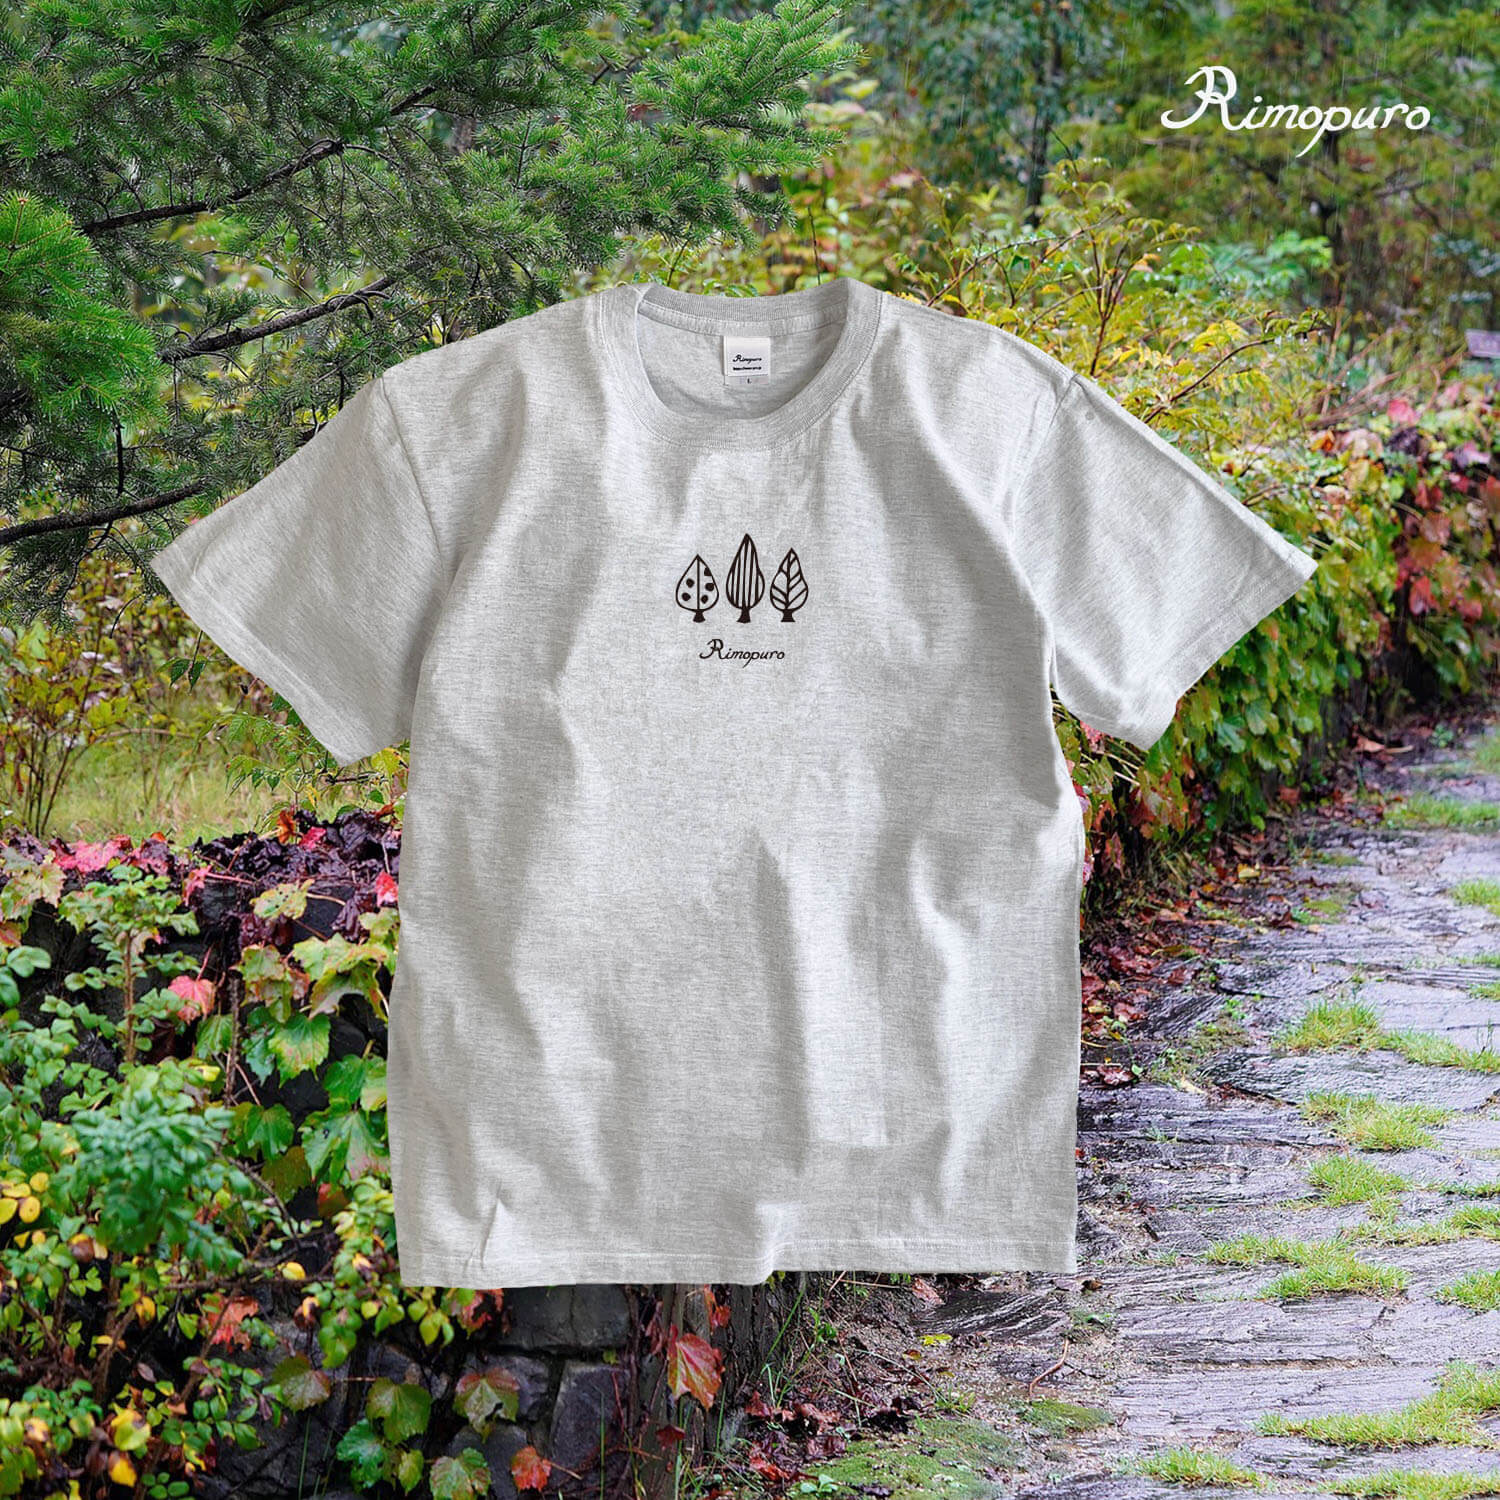 Rimopuro - 北欧柄のツリーデザイン半袖Tシャツ